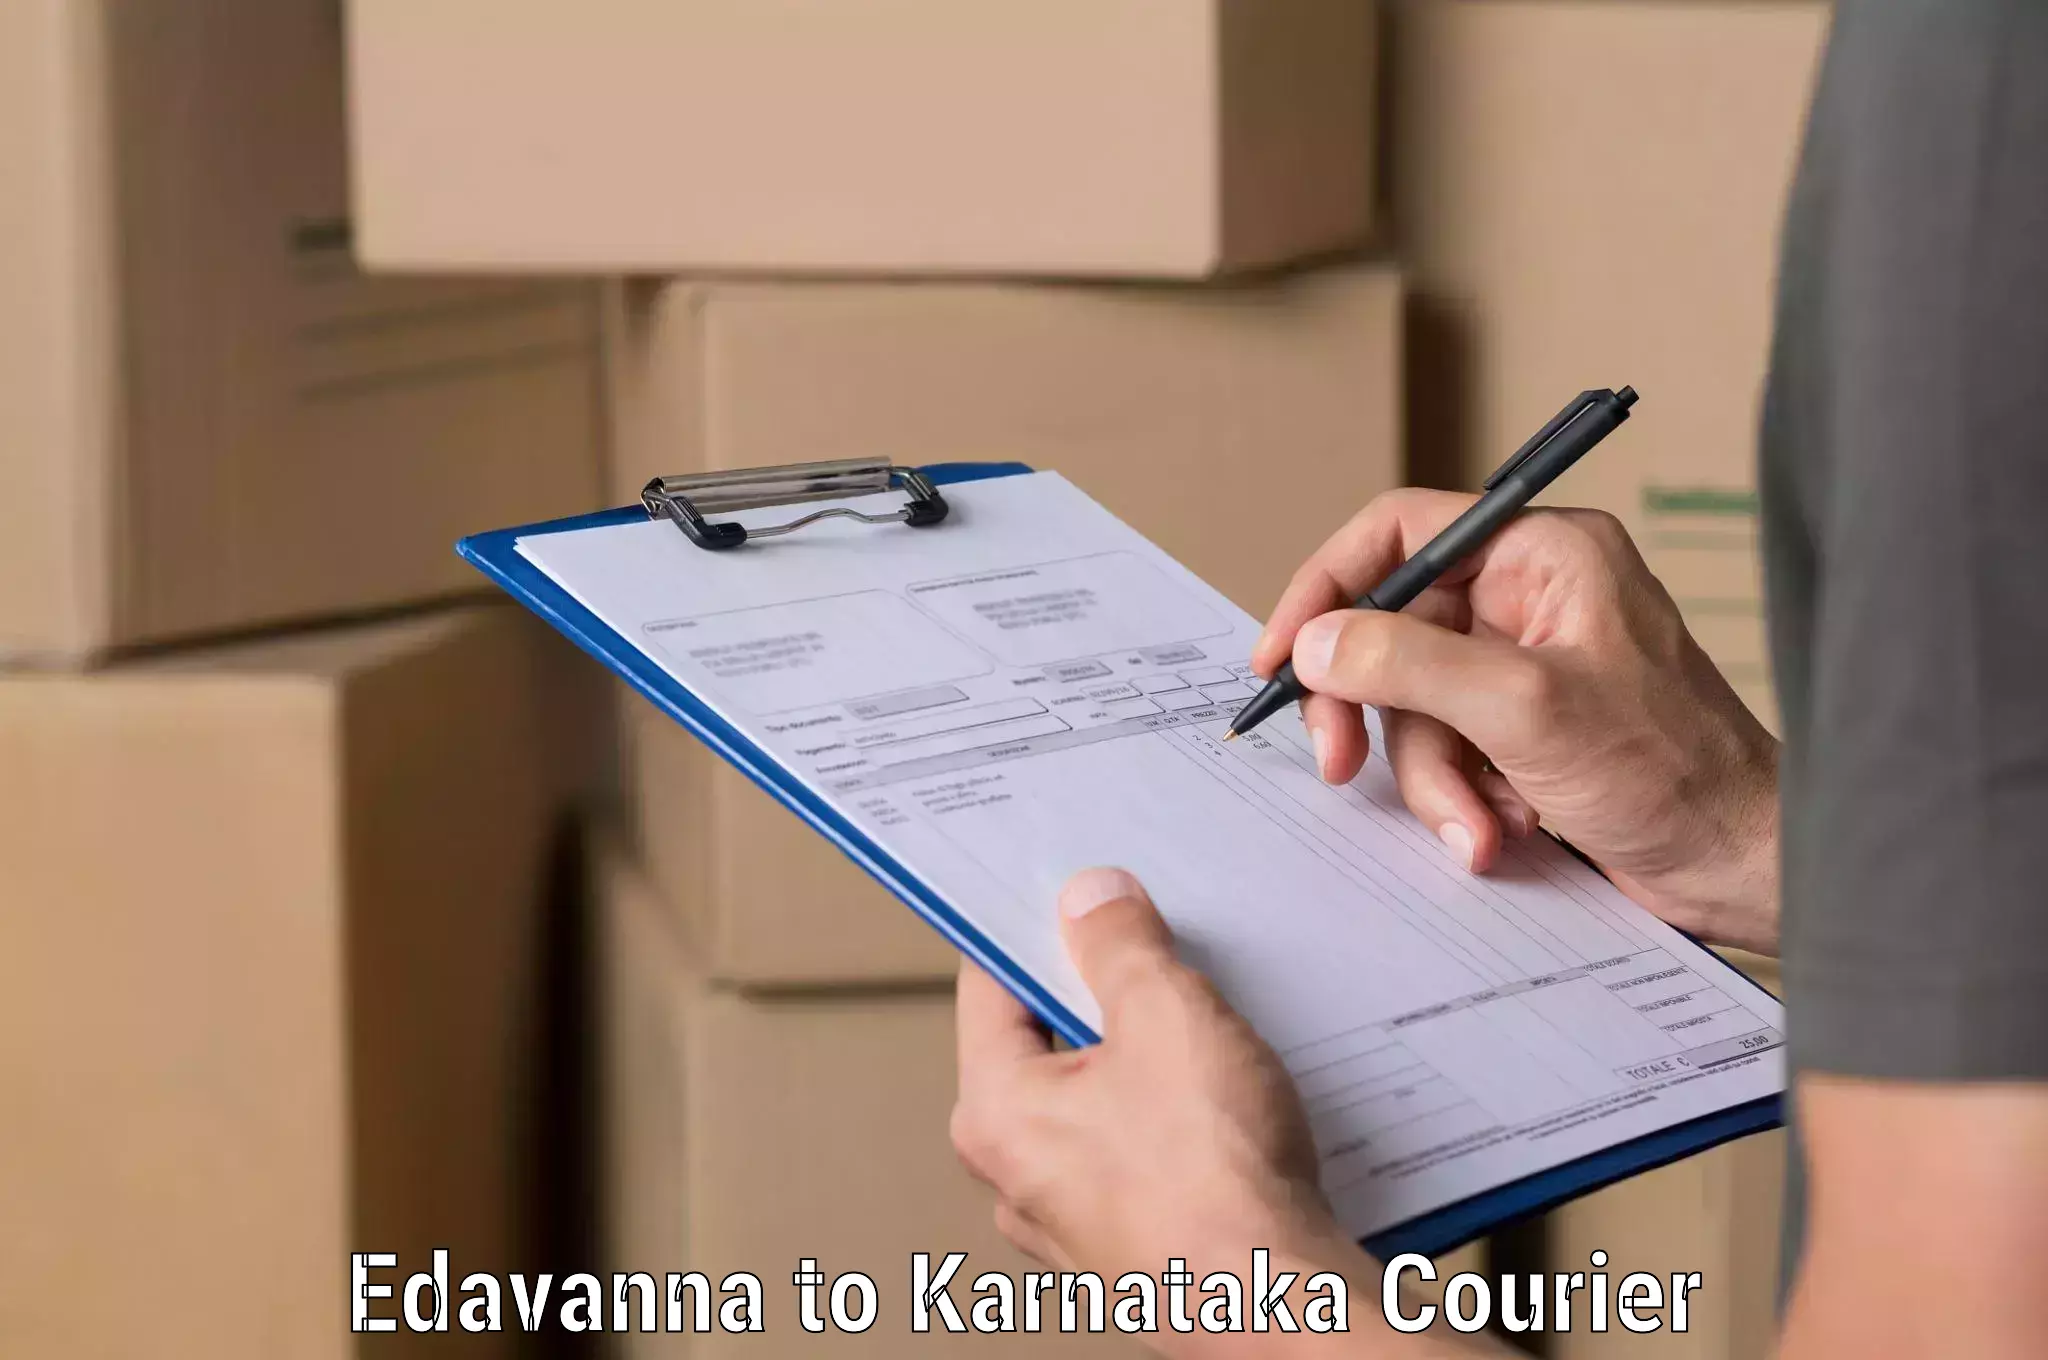 State-of-the-art courier technology Edavanna to Karnataka